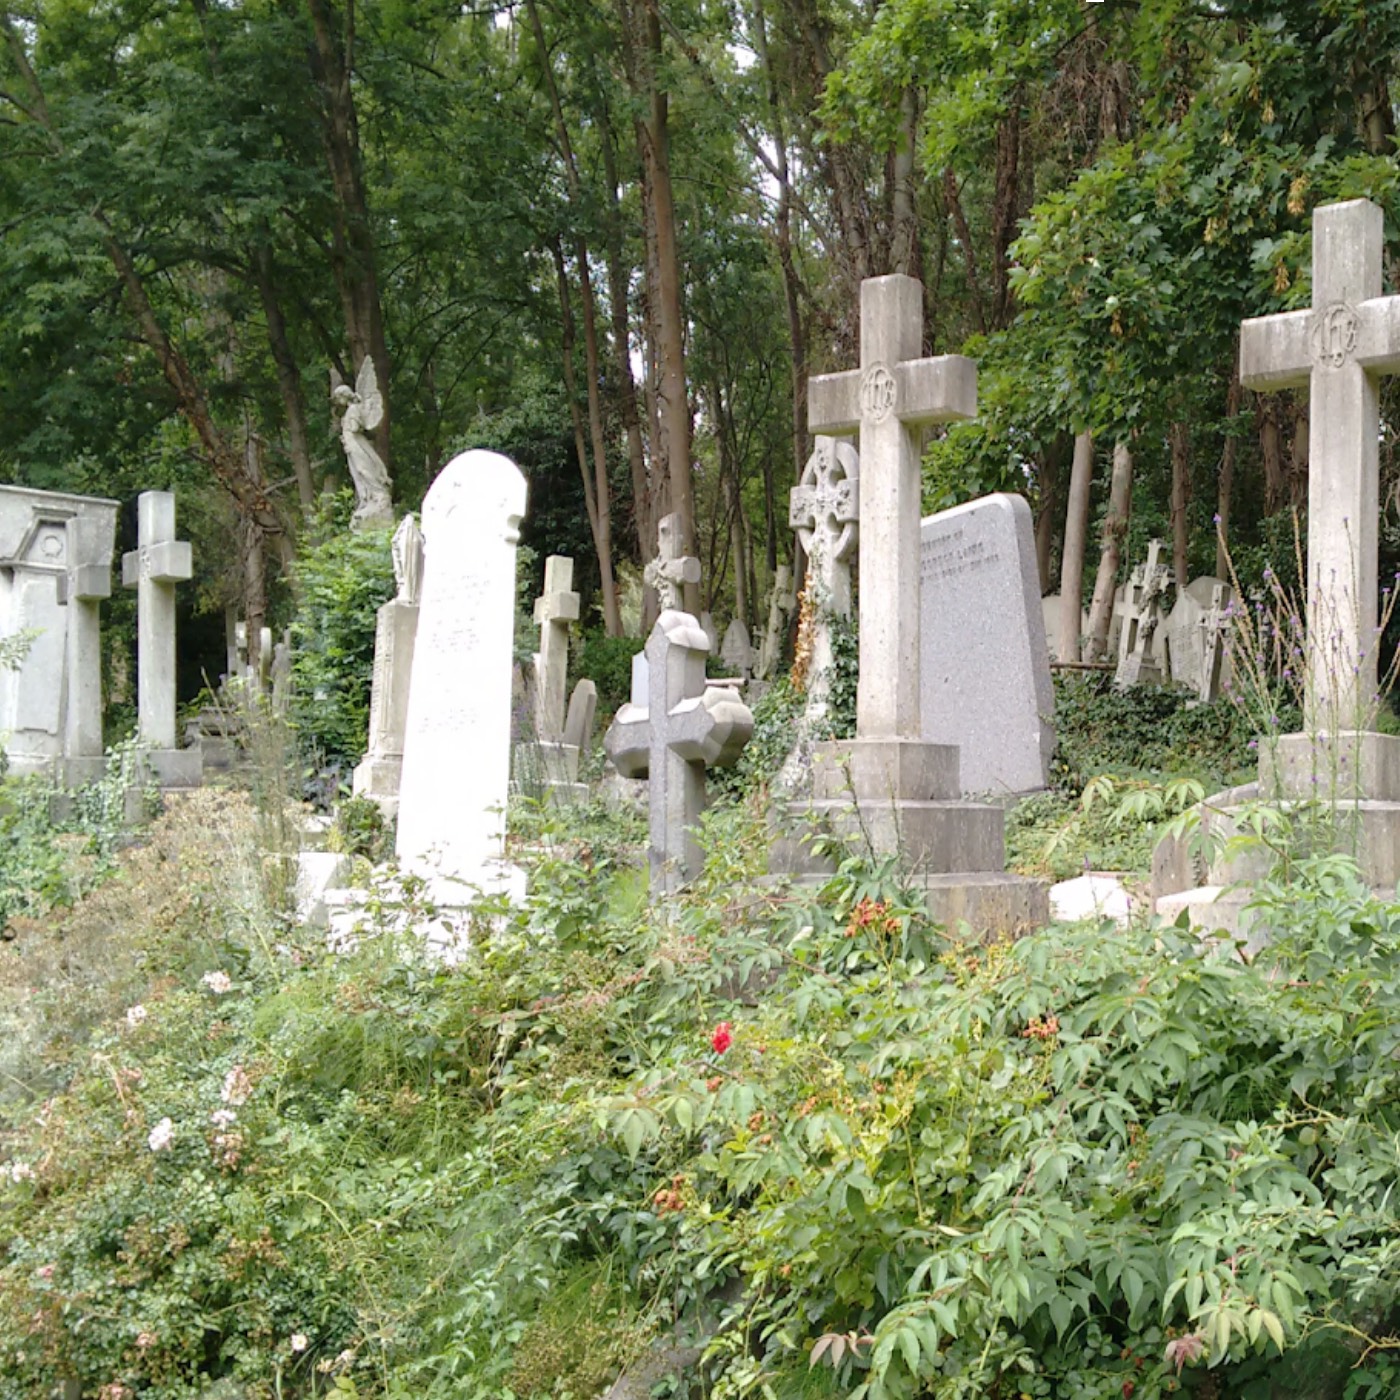 headstones in a graveyard